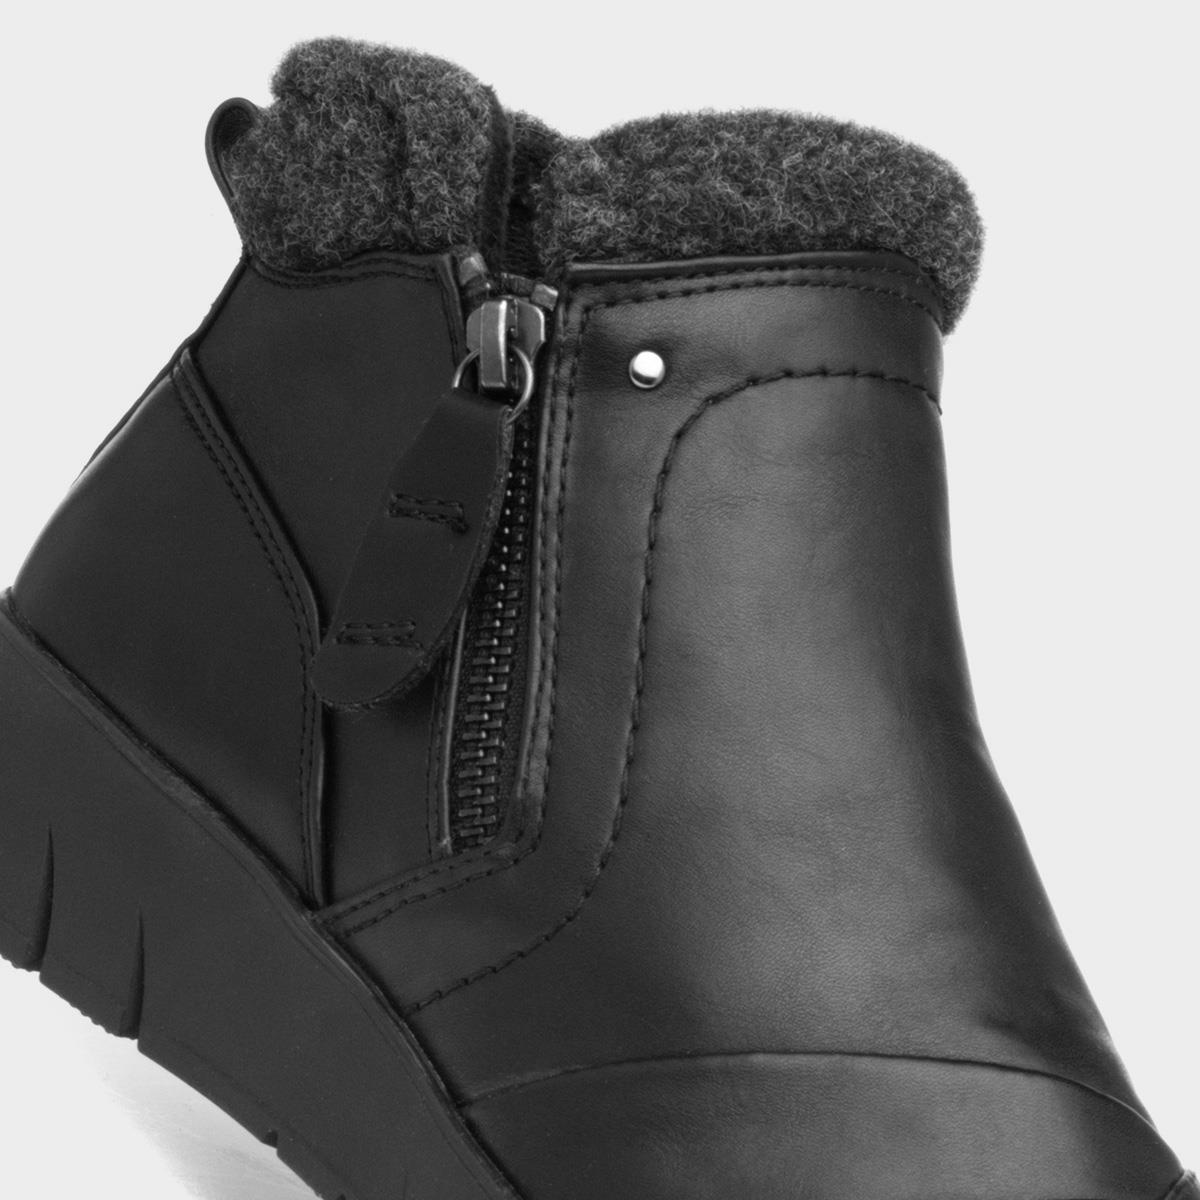 Jana Softline Womens Black Double Zip Boot-187003 | Shoe Zone